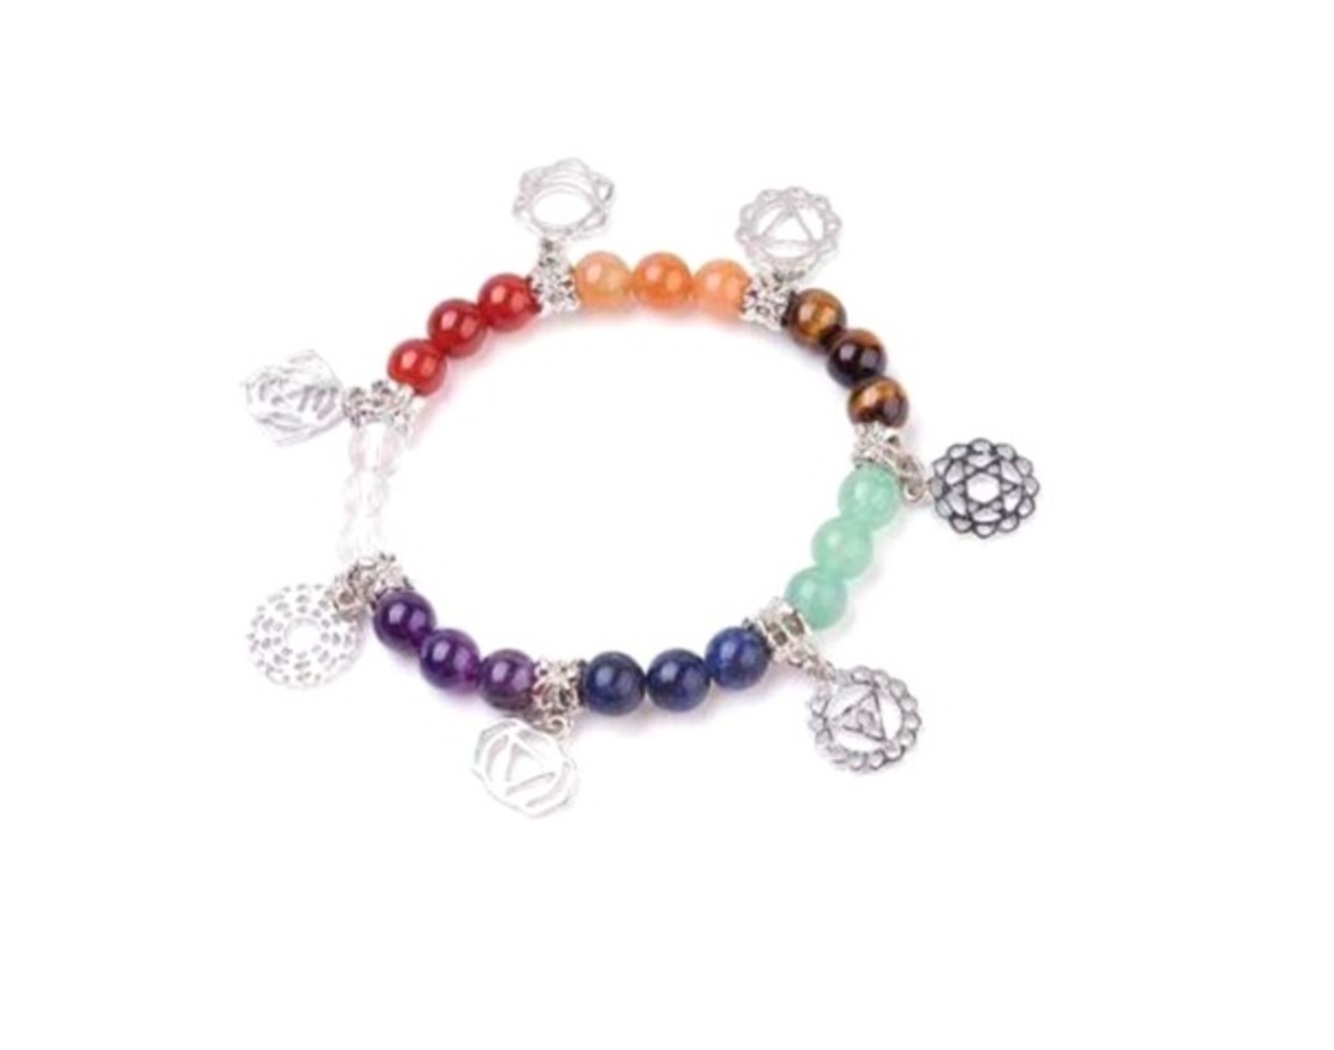 7 Chakra Beads Charm Bracelet